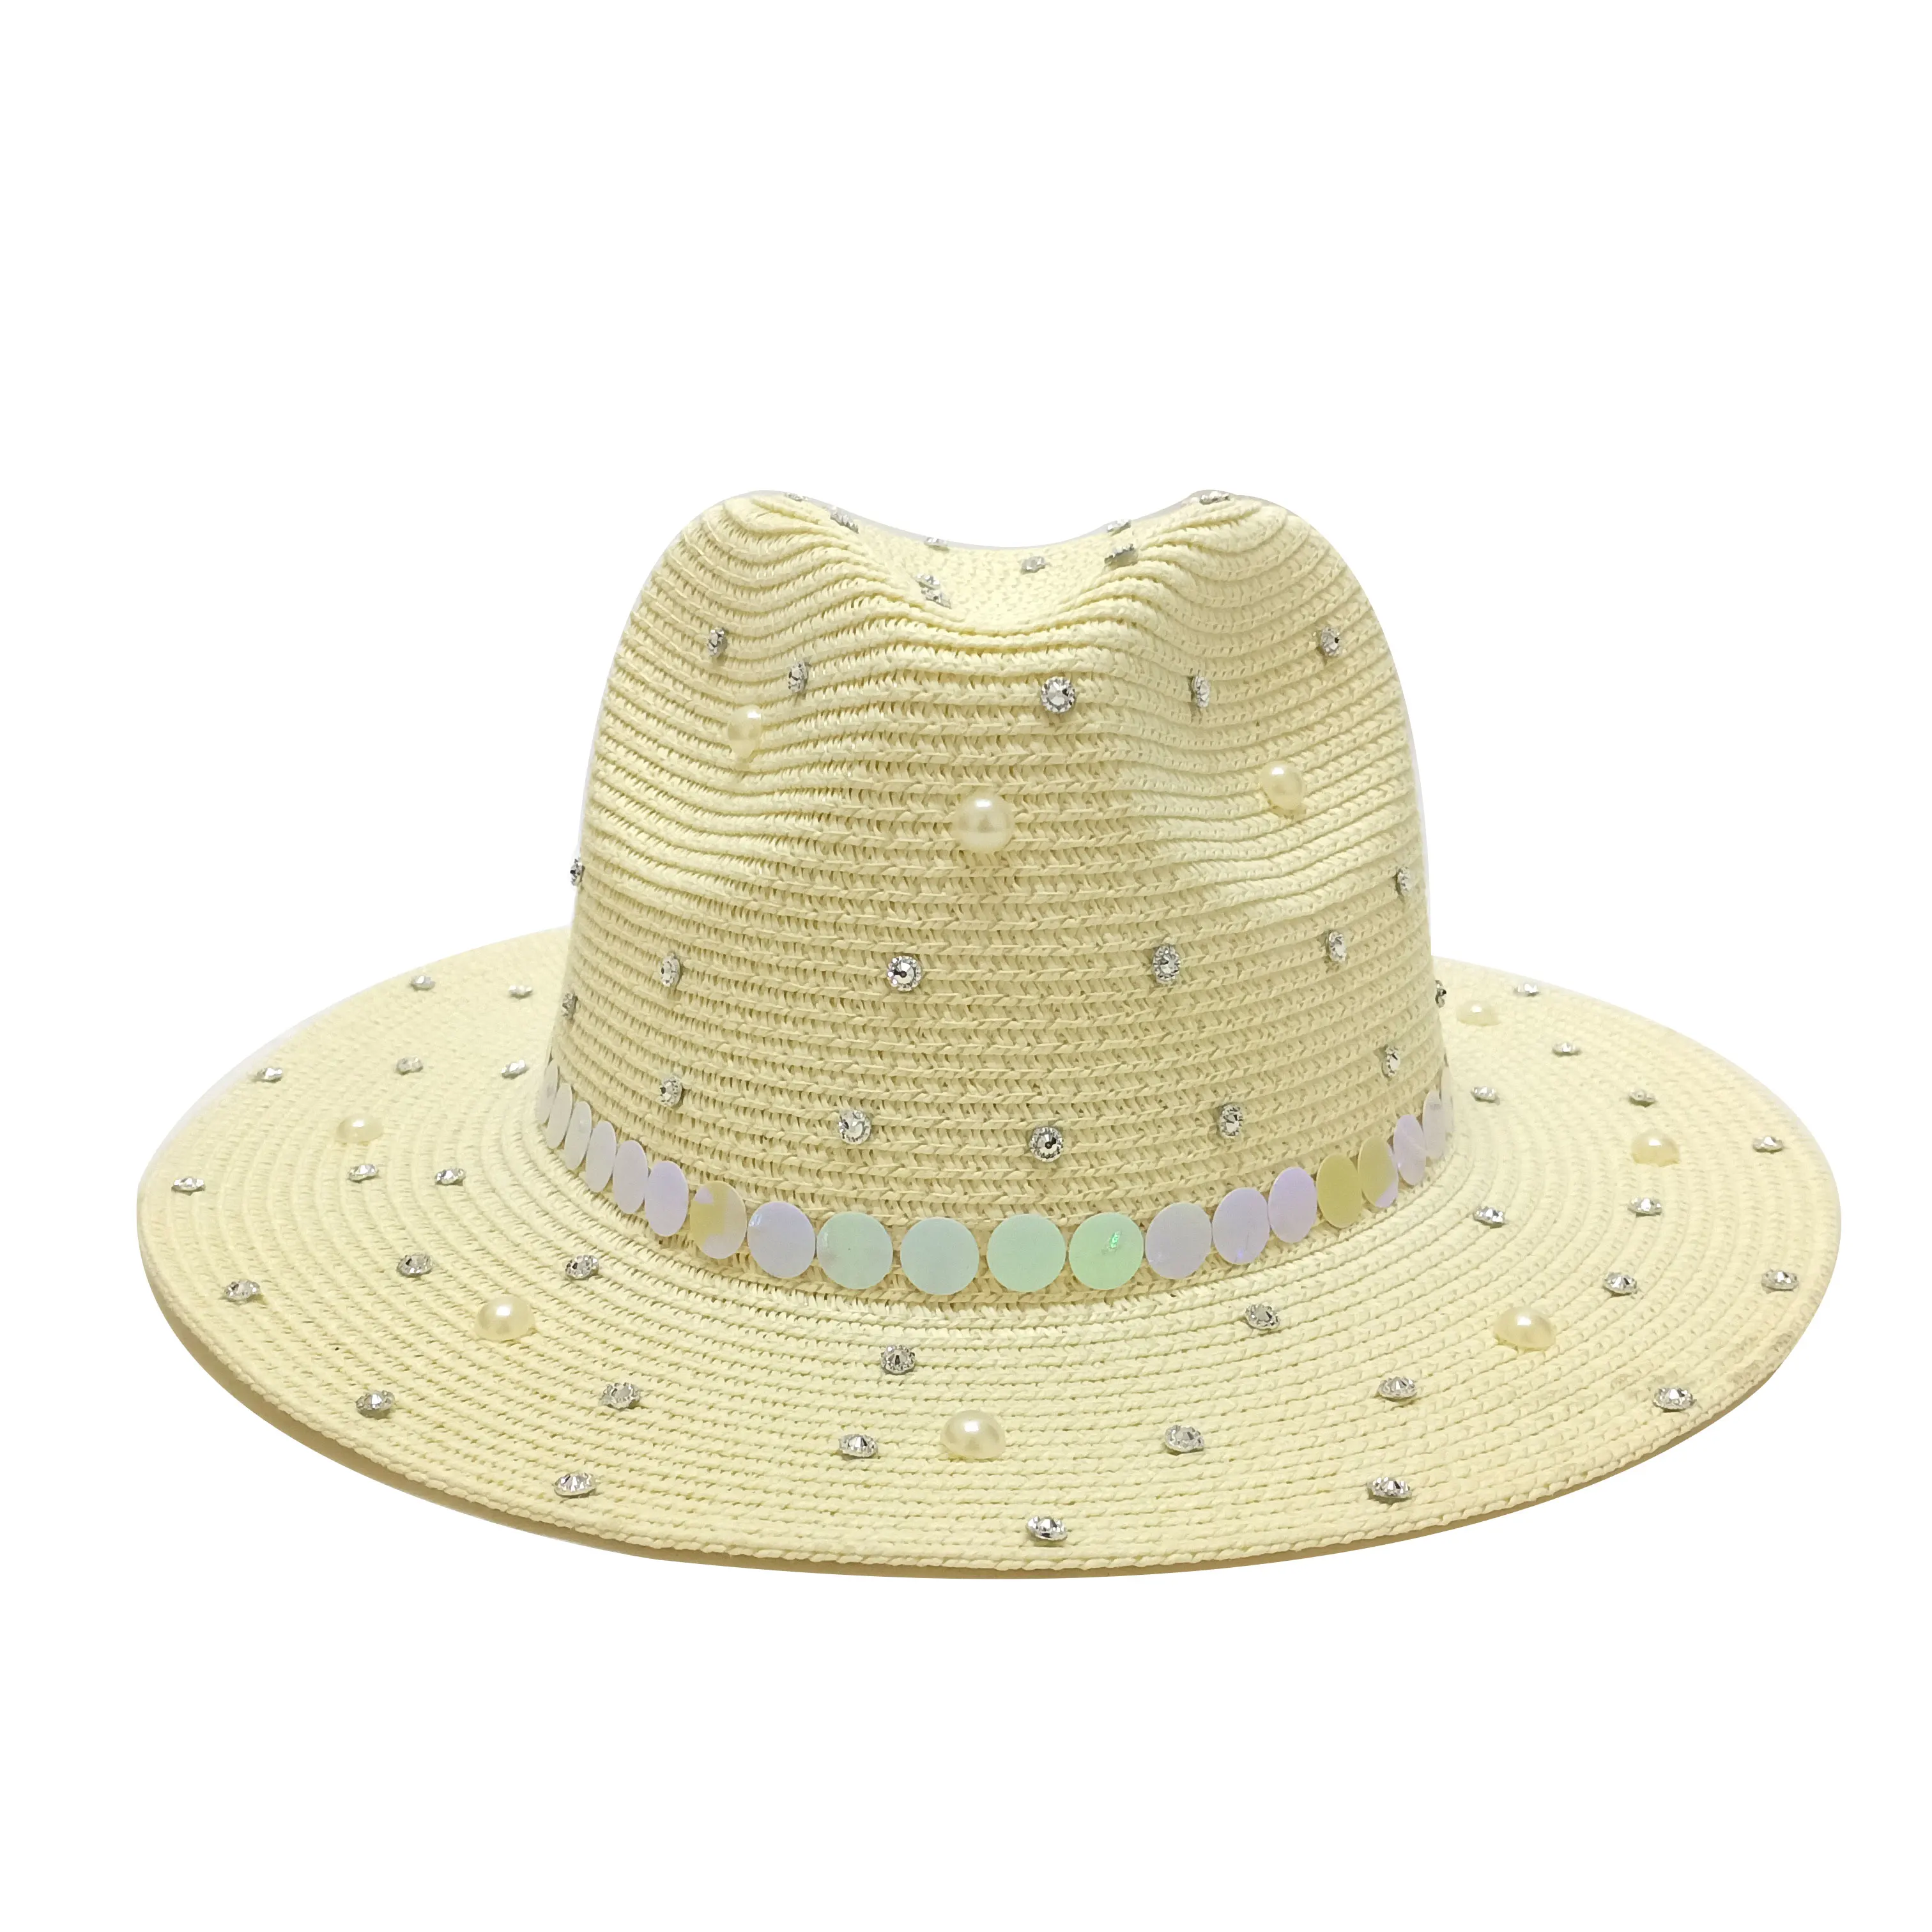 SUN Hat Straw Hat Pearl Bright Diamond Women's Hat Summer Outdoor Travel Beach Vacation Seaside Sun Hat Sunhat Bucket Hat 2021 3